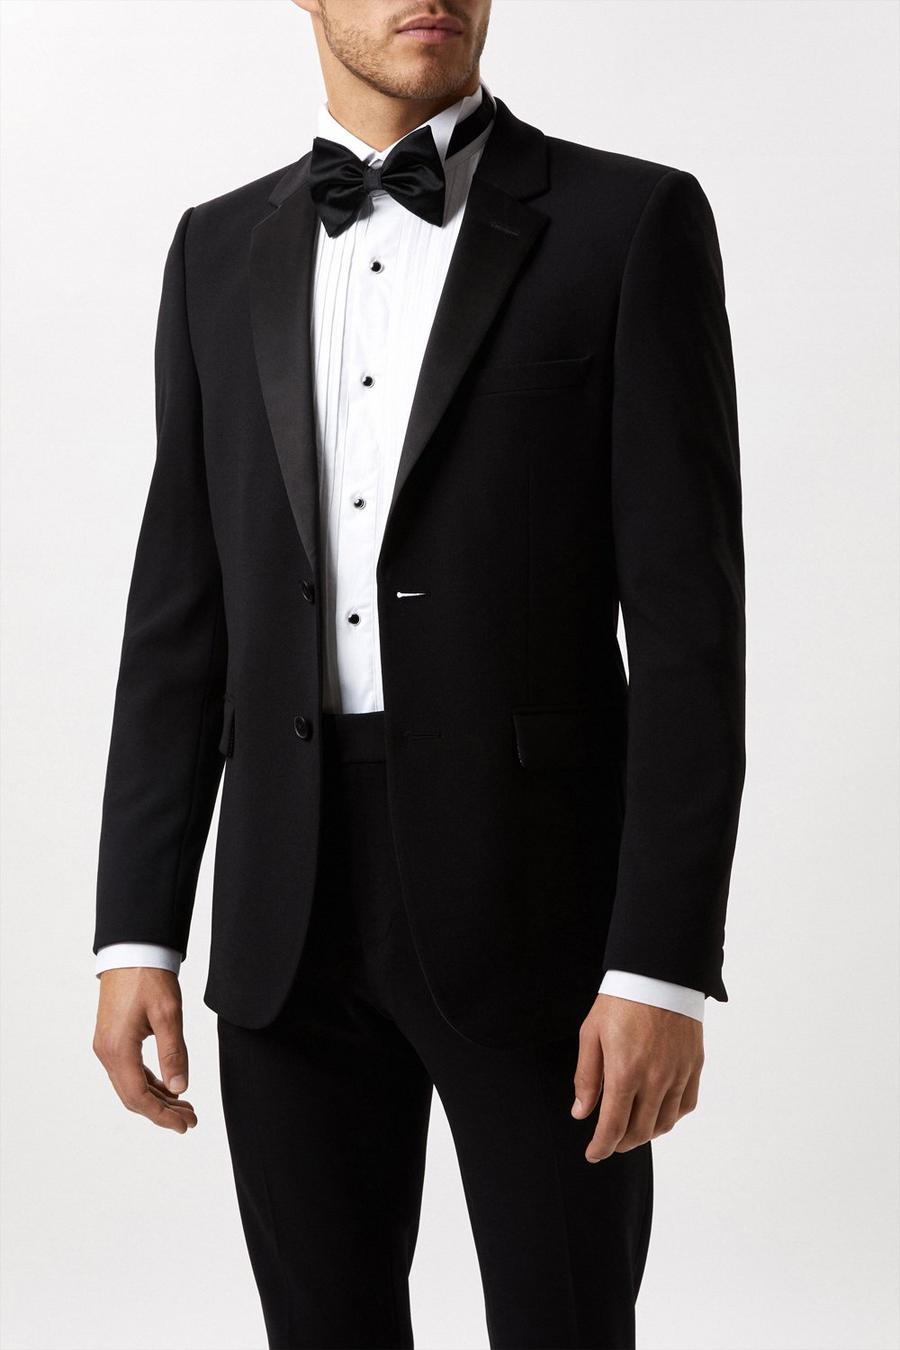 Skinny Fit Black Tuxedo Suit Jacket